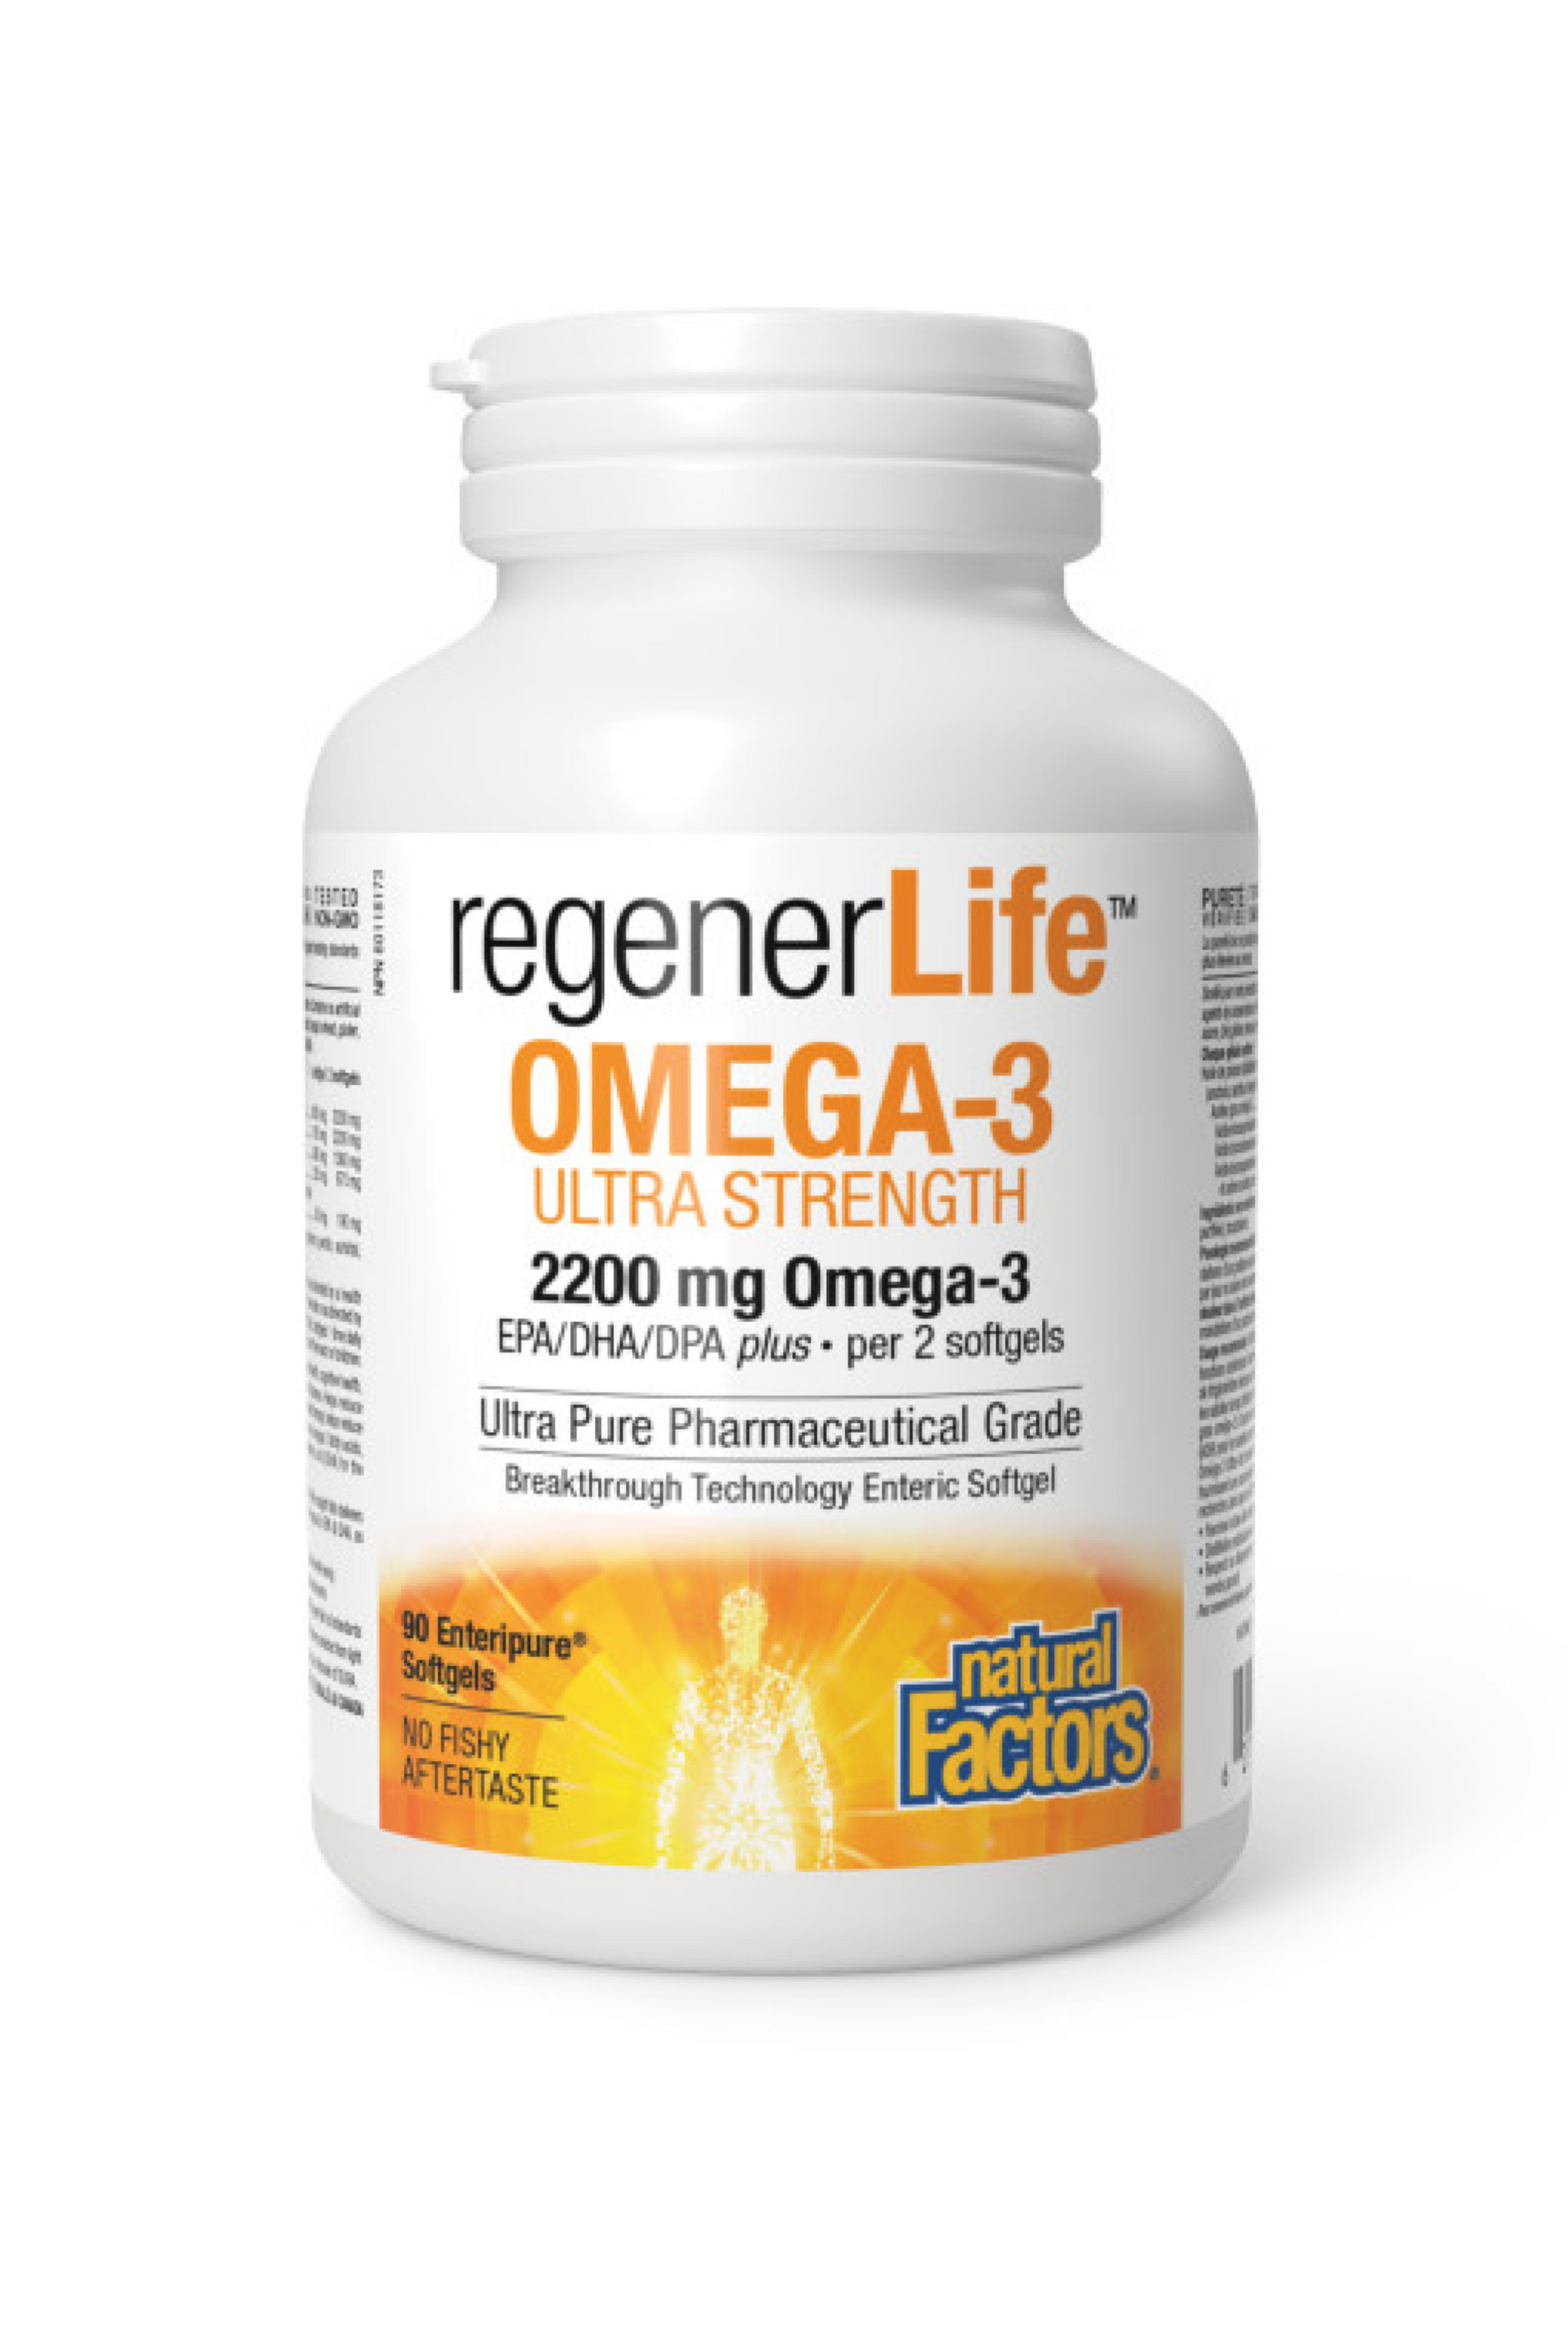 Natural Factors regenerLife Utlra Strength Omega-3 90s